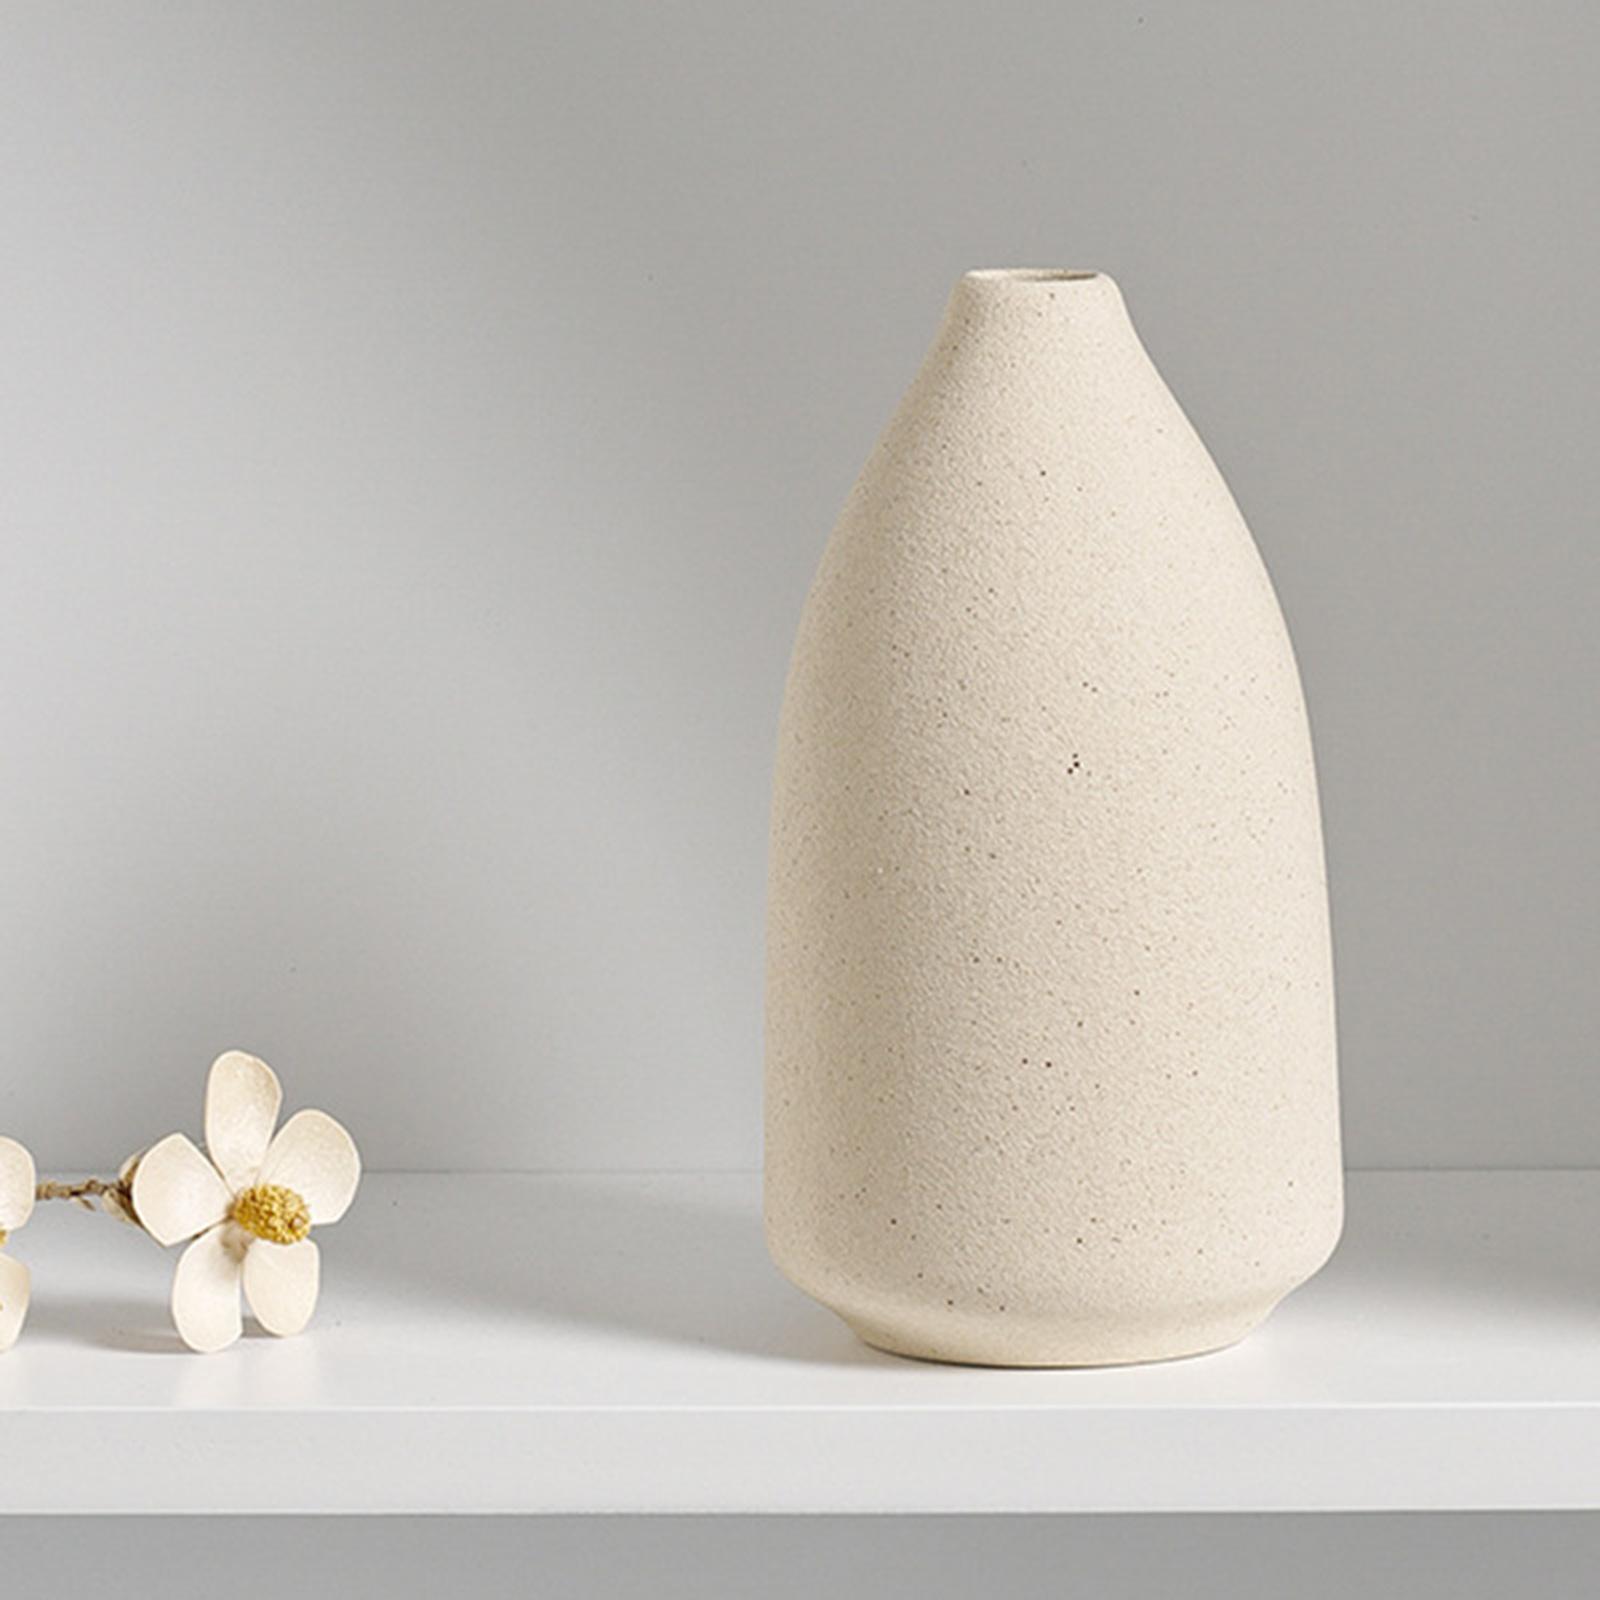 4x Ceramic Vase Home Living Room Flower Vase Centerpieces